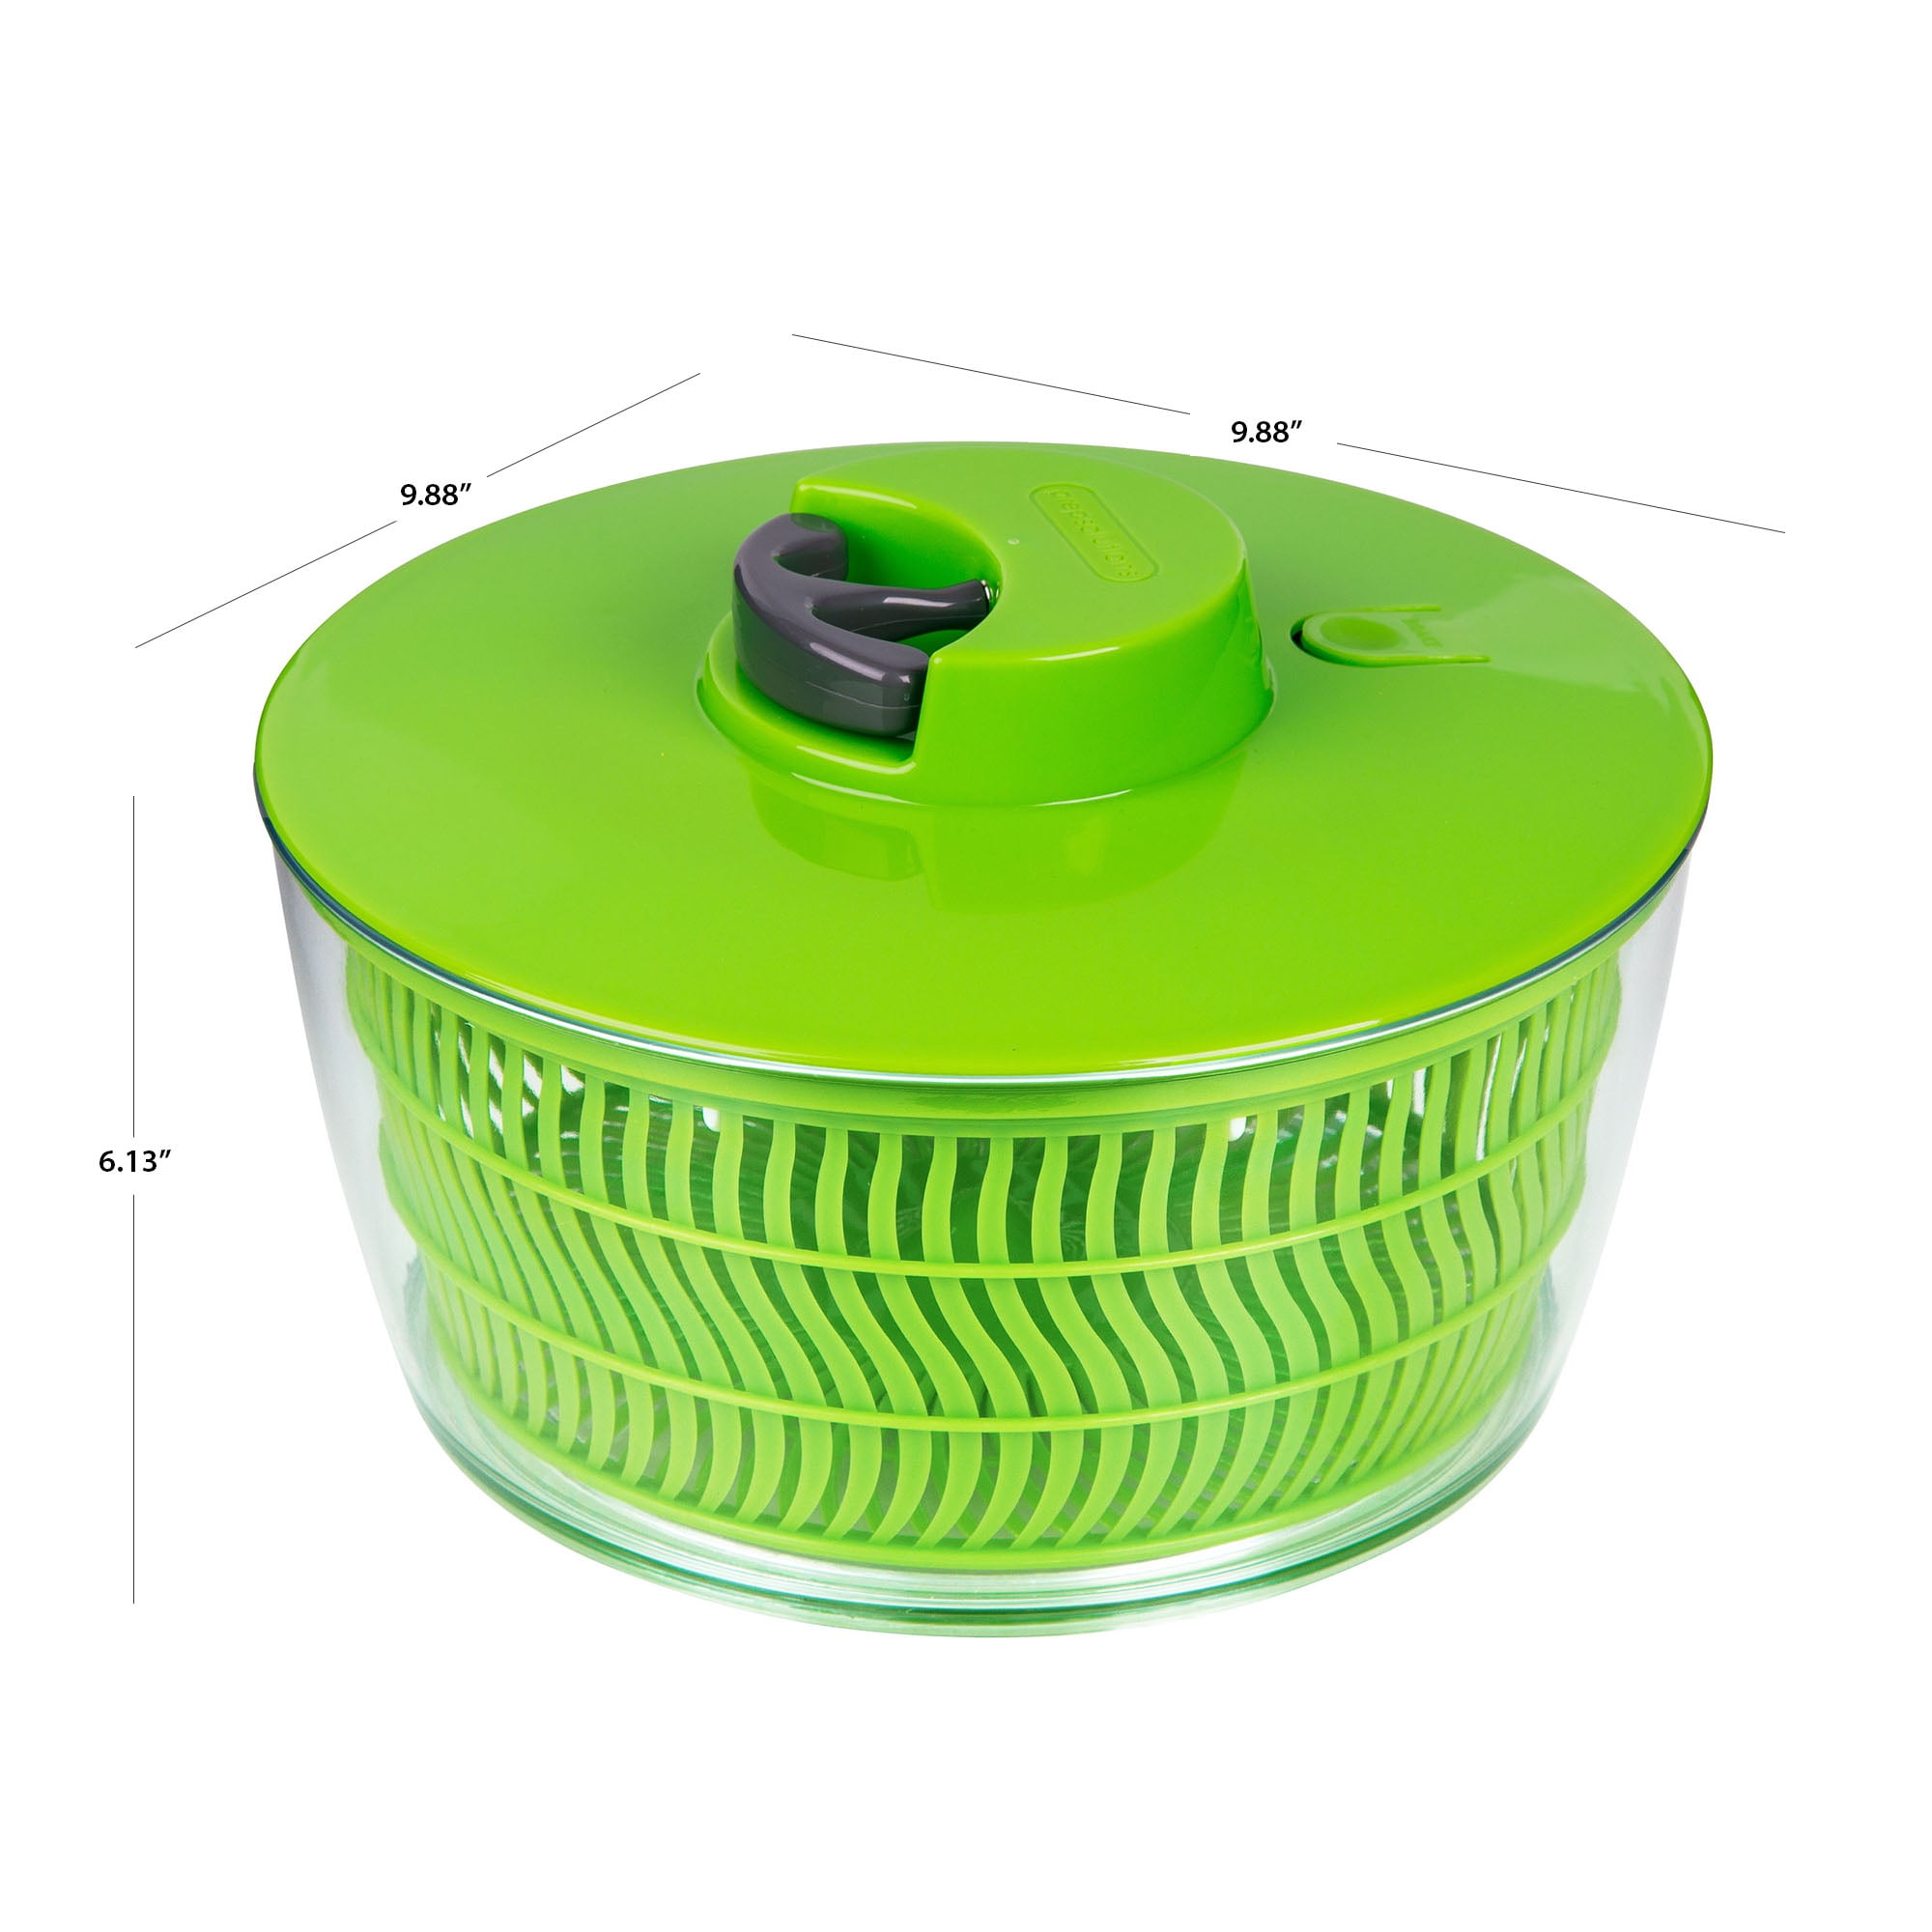 Progressive CSS-2 Green External Bowl Collapsible Salad Spinner 3 qt.